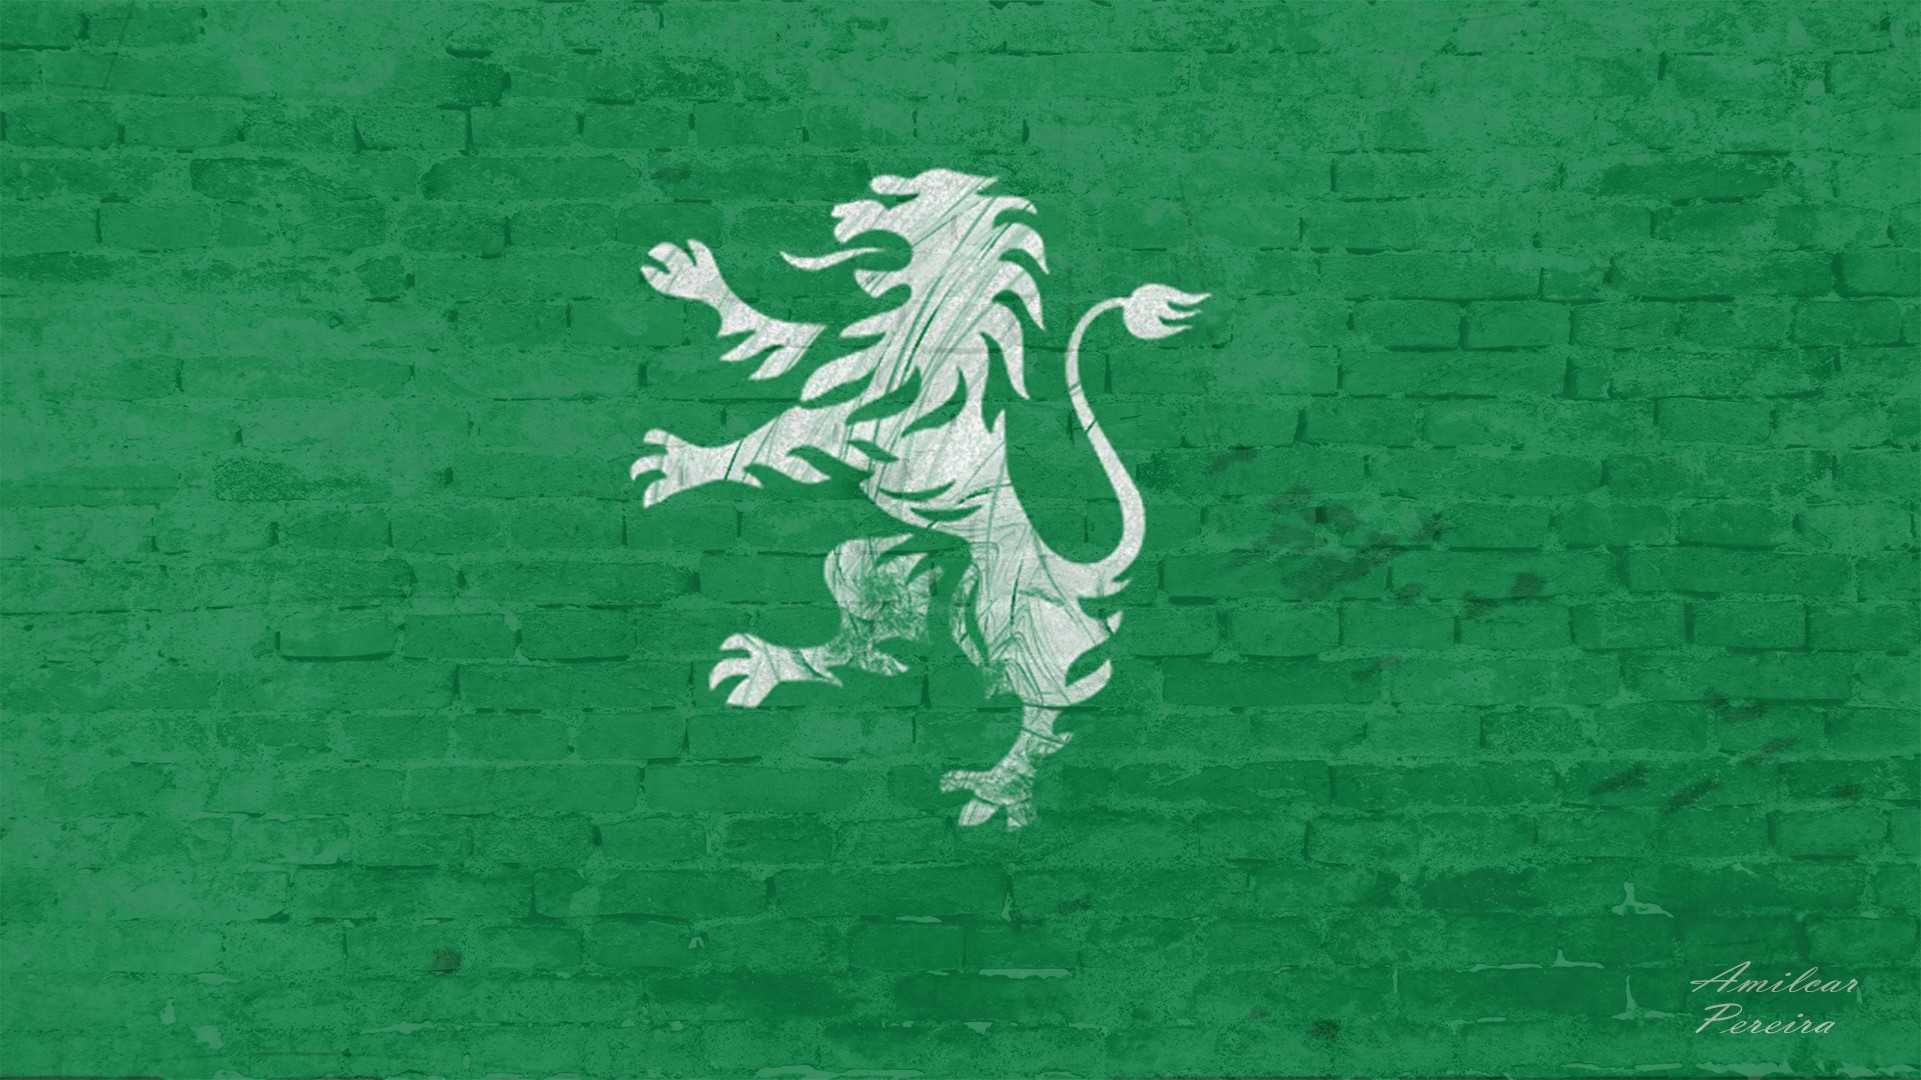 General 1921x1080 lion wall green background Sporting sporting clube de portugal sigils logo digital art watermarked